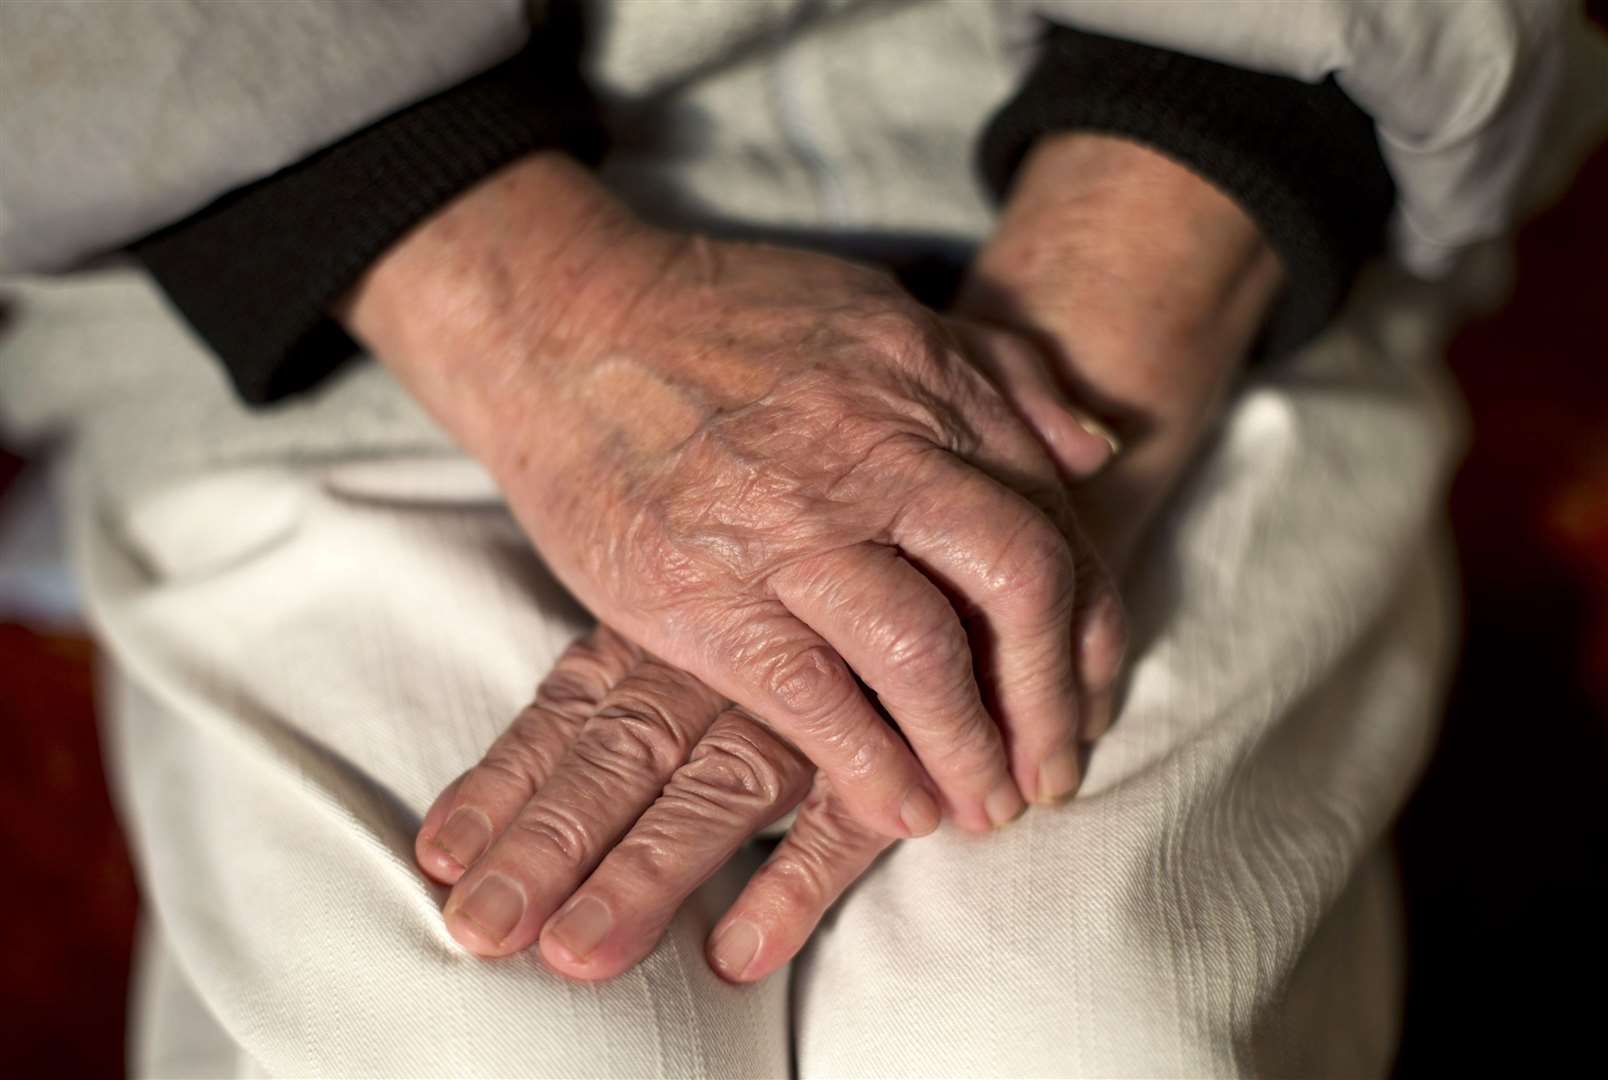 The hands of an elderly woman (Yui Mok/PA)